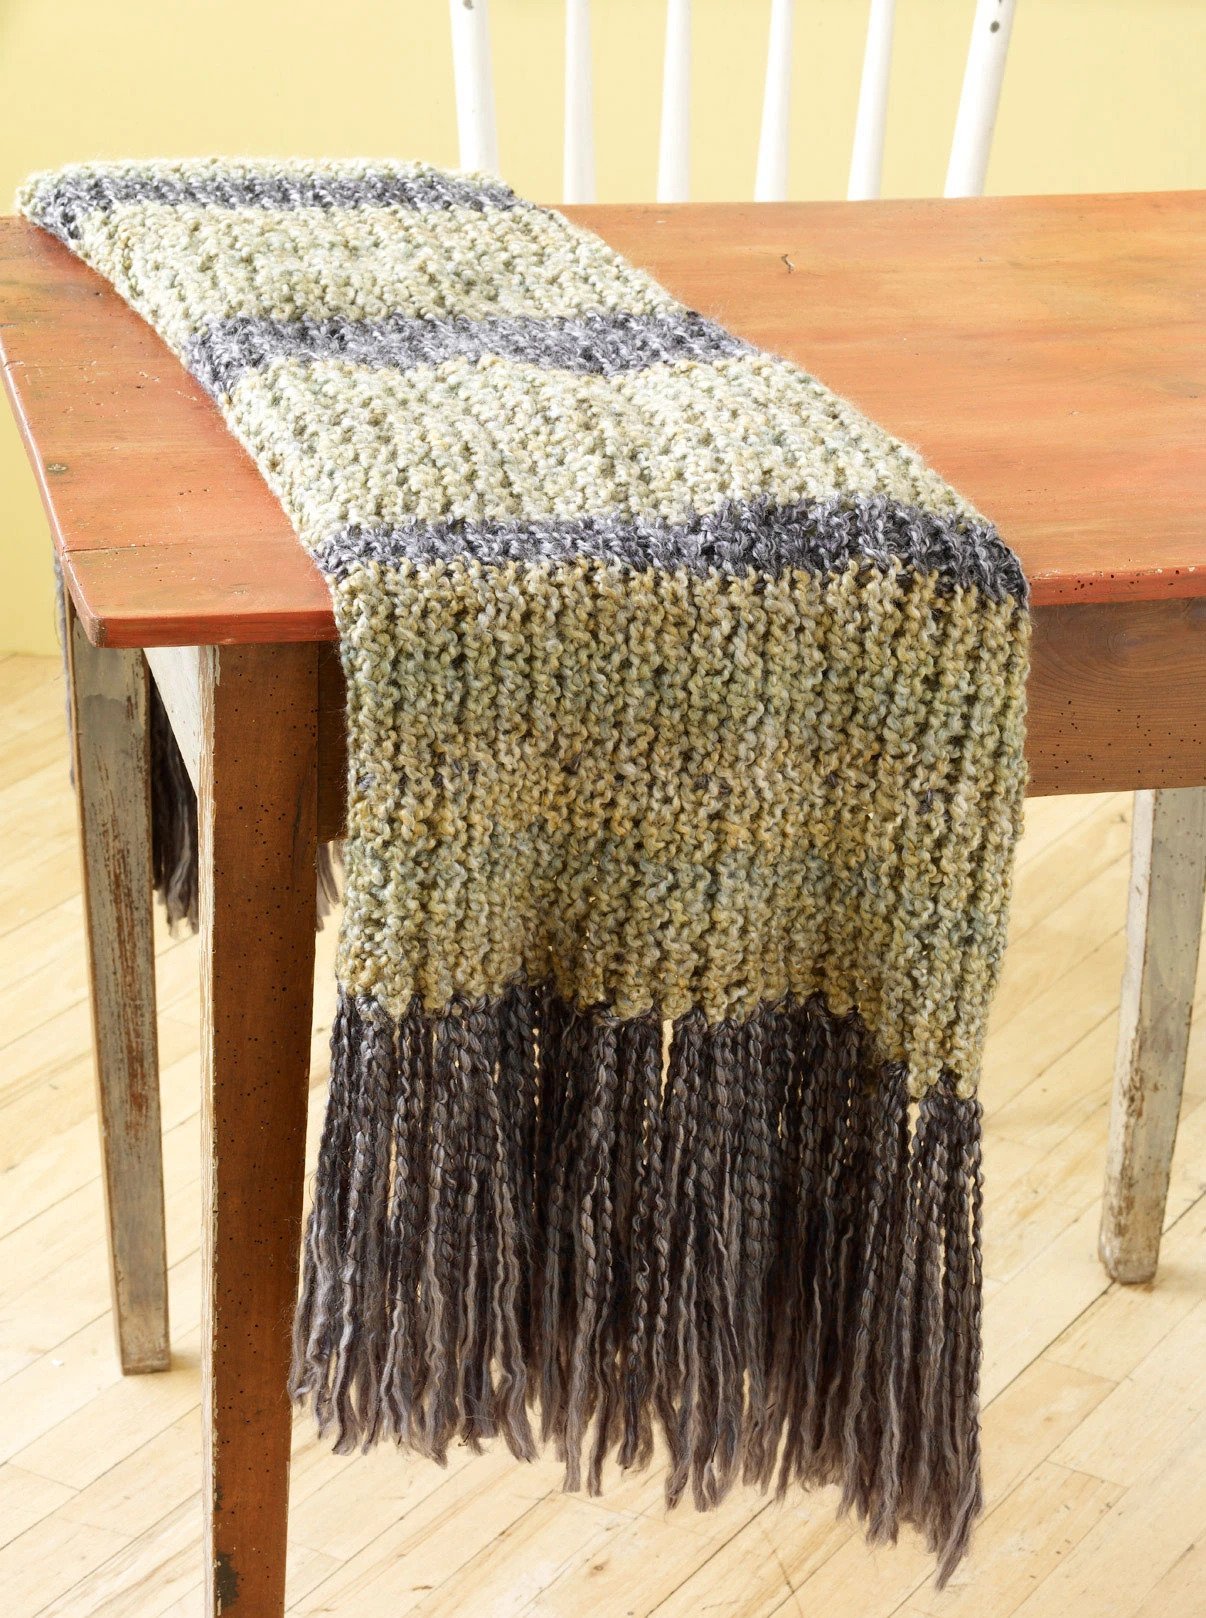 Aspiring blanket : r/LoomKnitting